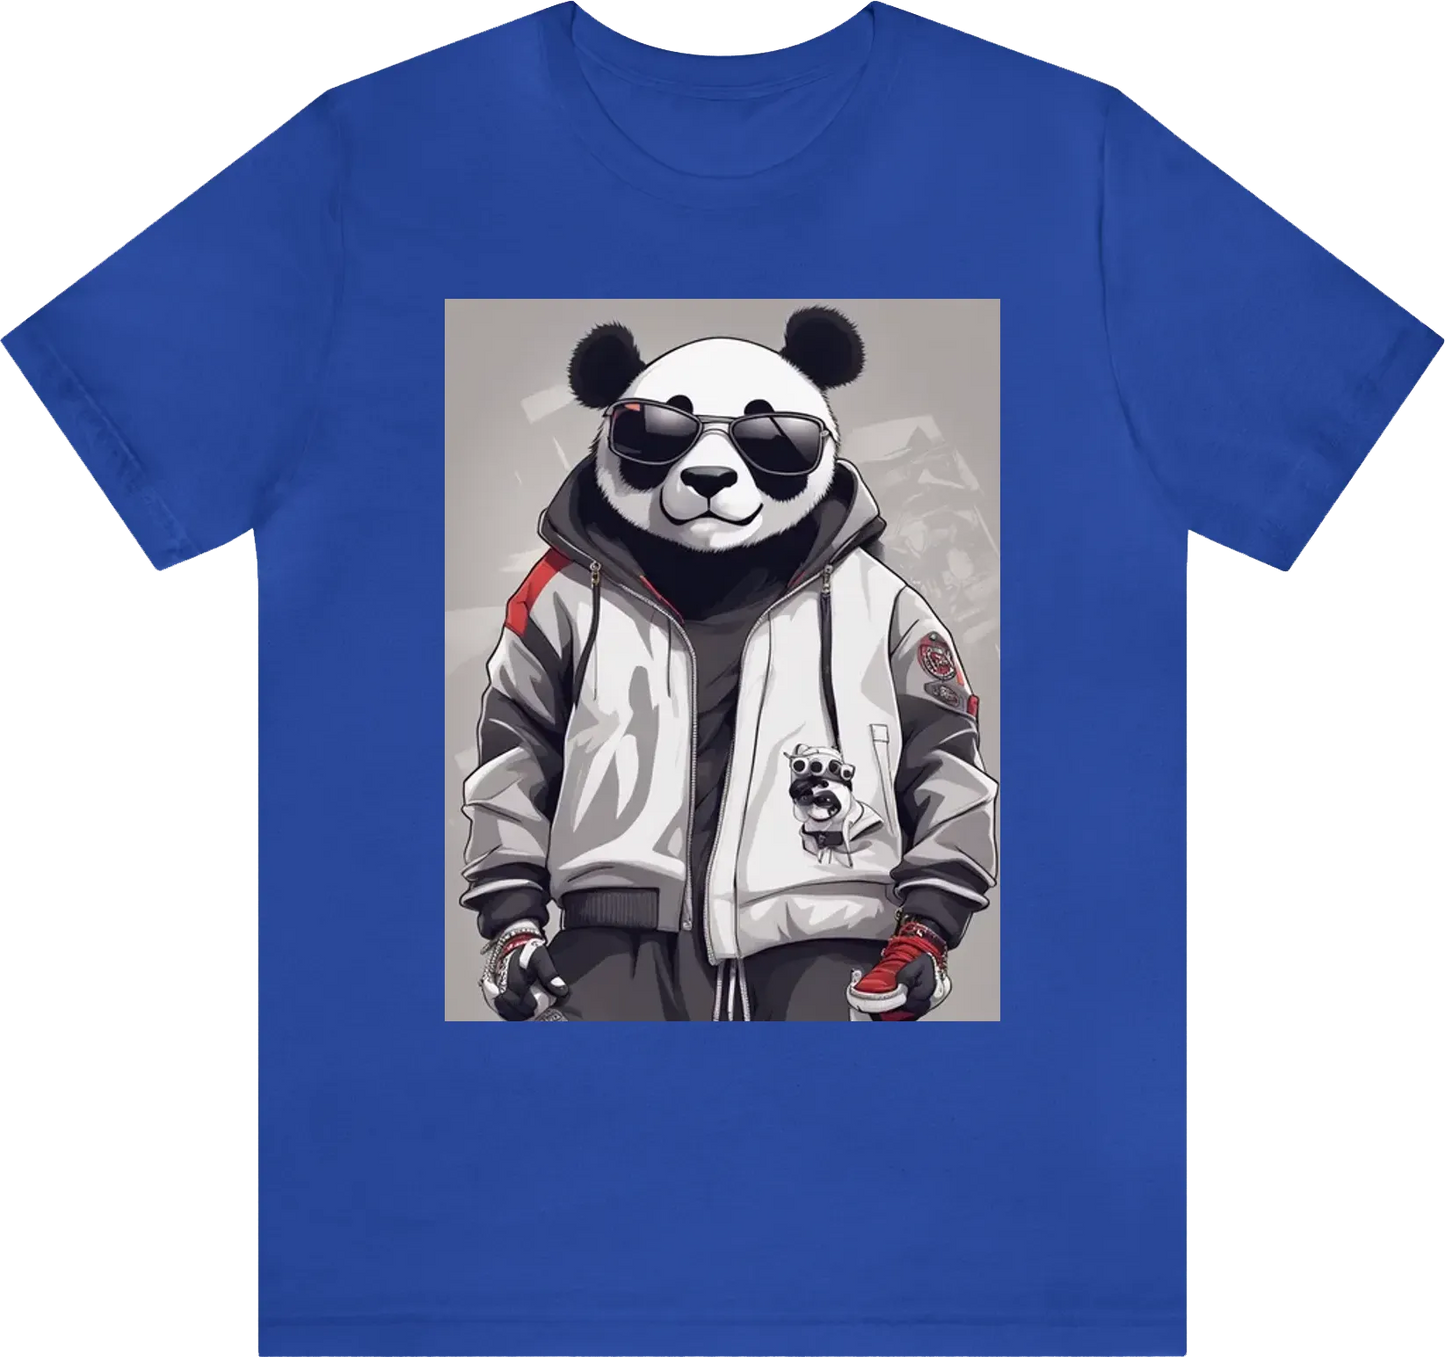 Create a panda wearing 99's hip hop clothing